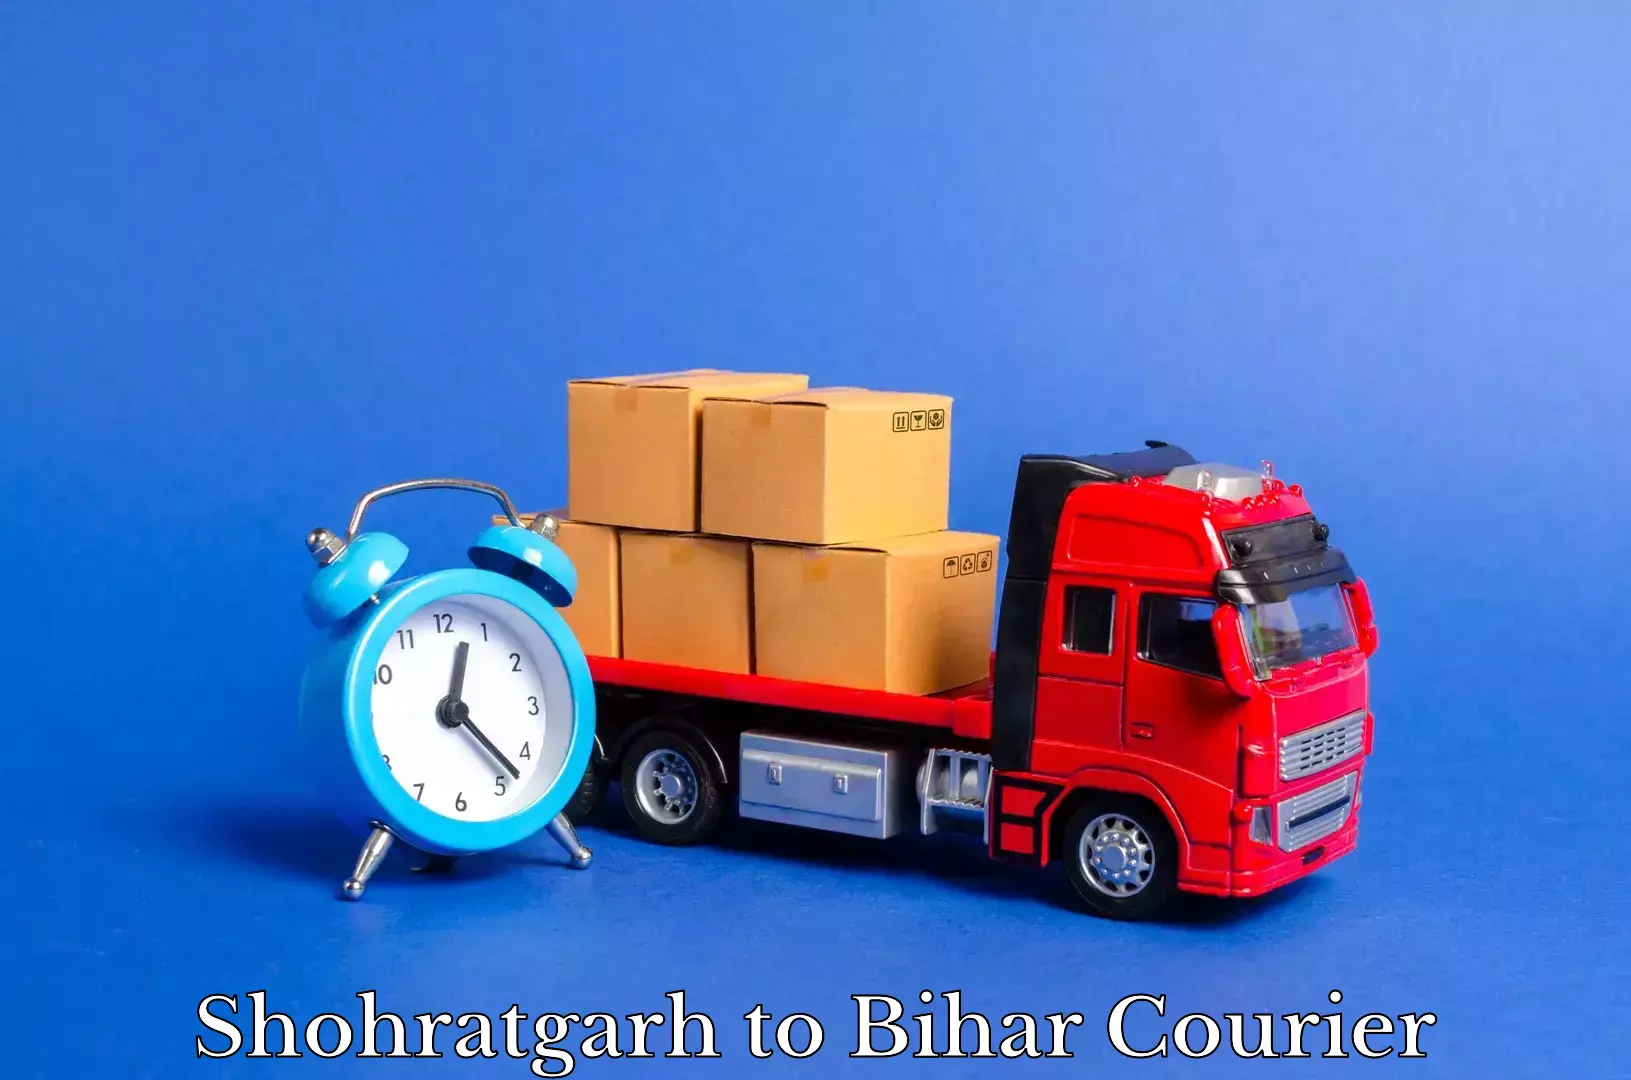 Trusted relocation experts Shohratgarh to Bhabua